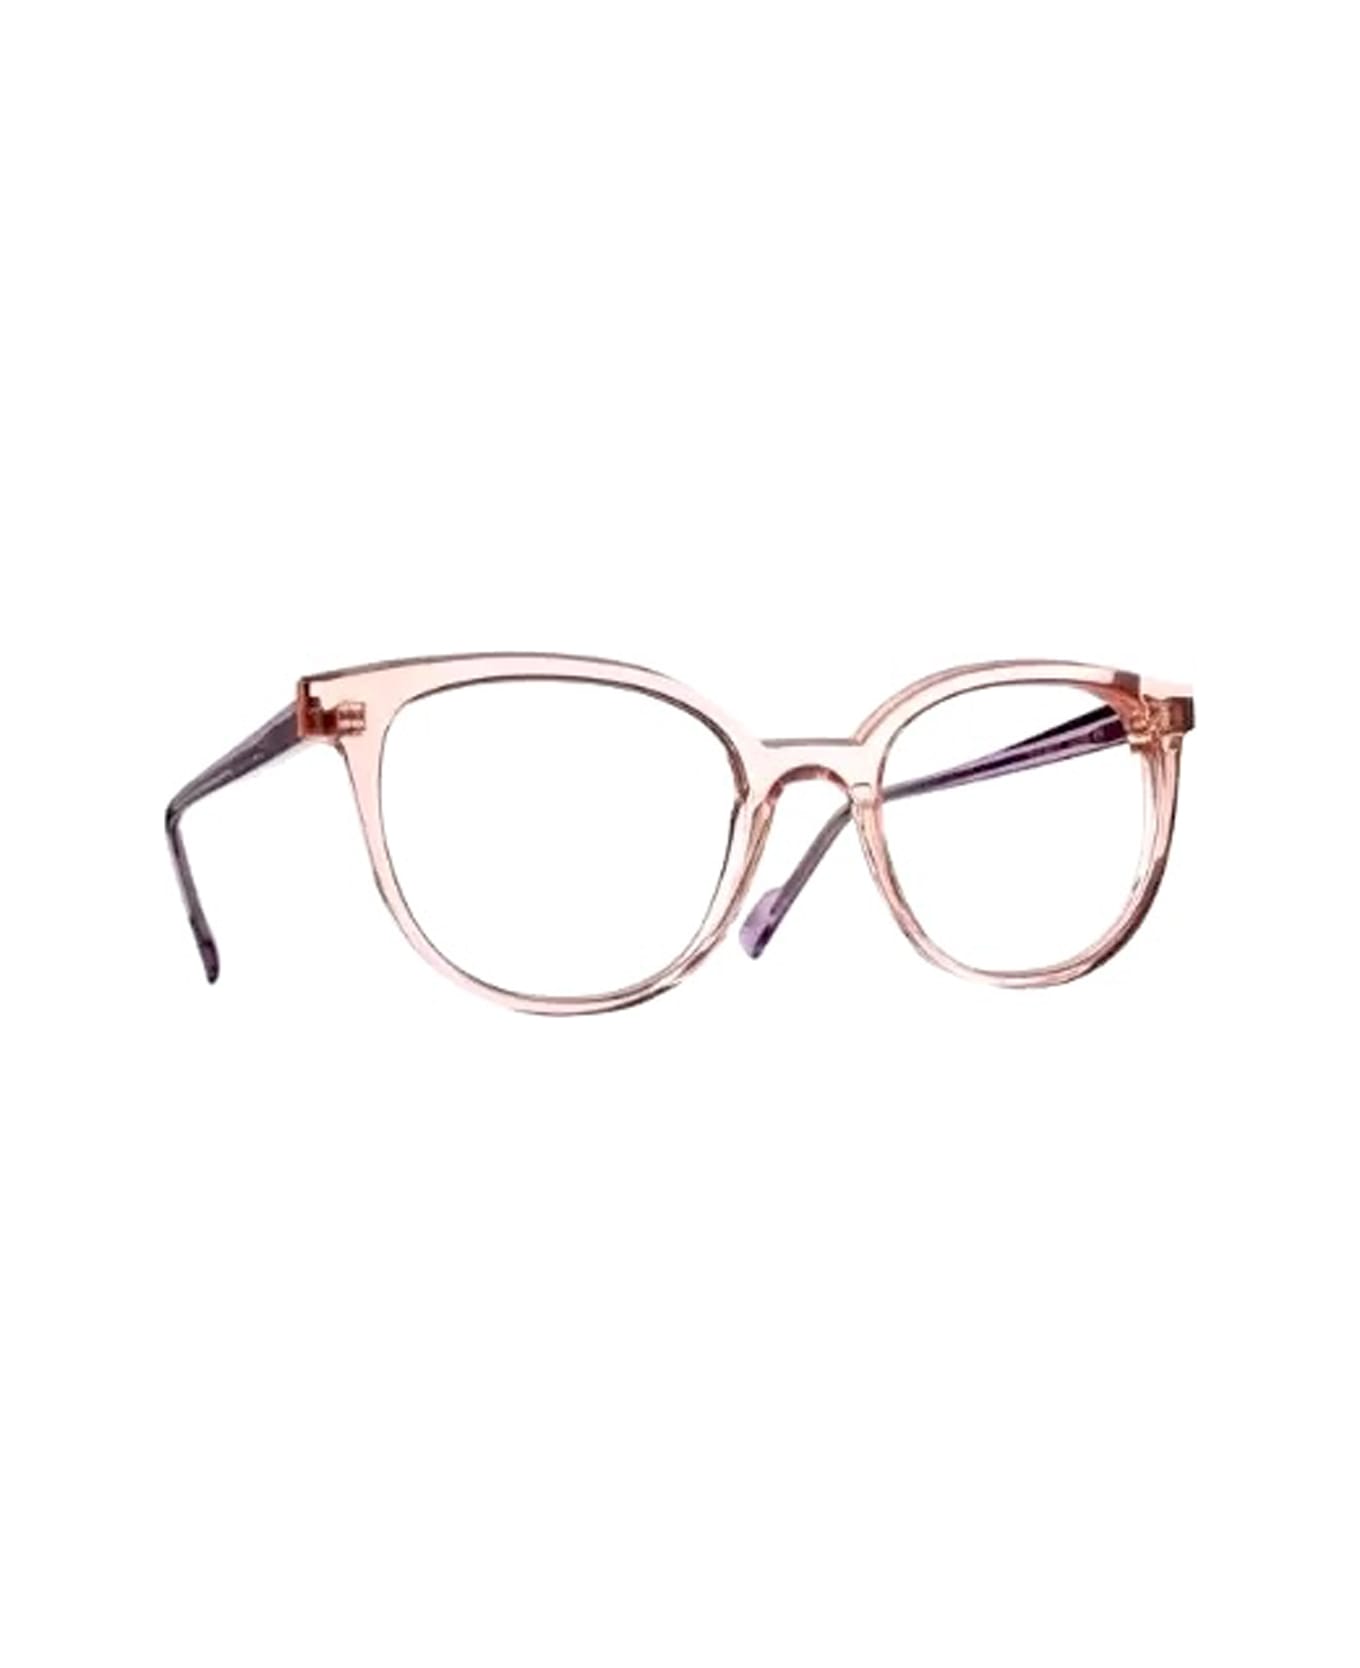 Blush By Caroline Abram Allure 1011 Glasses - Rosa